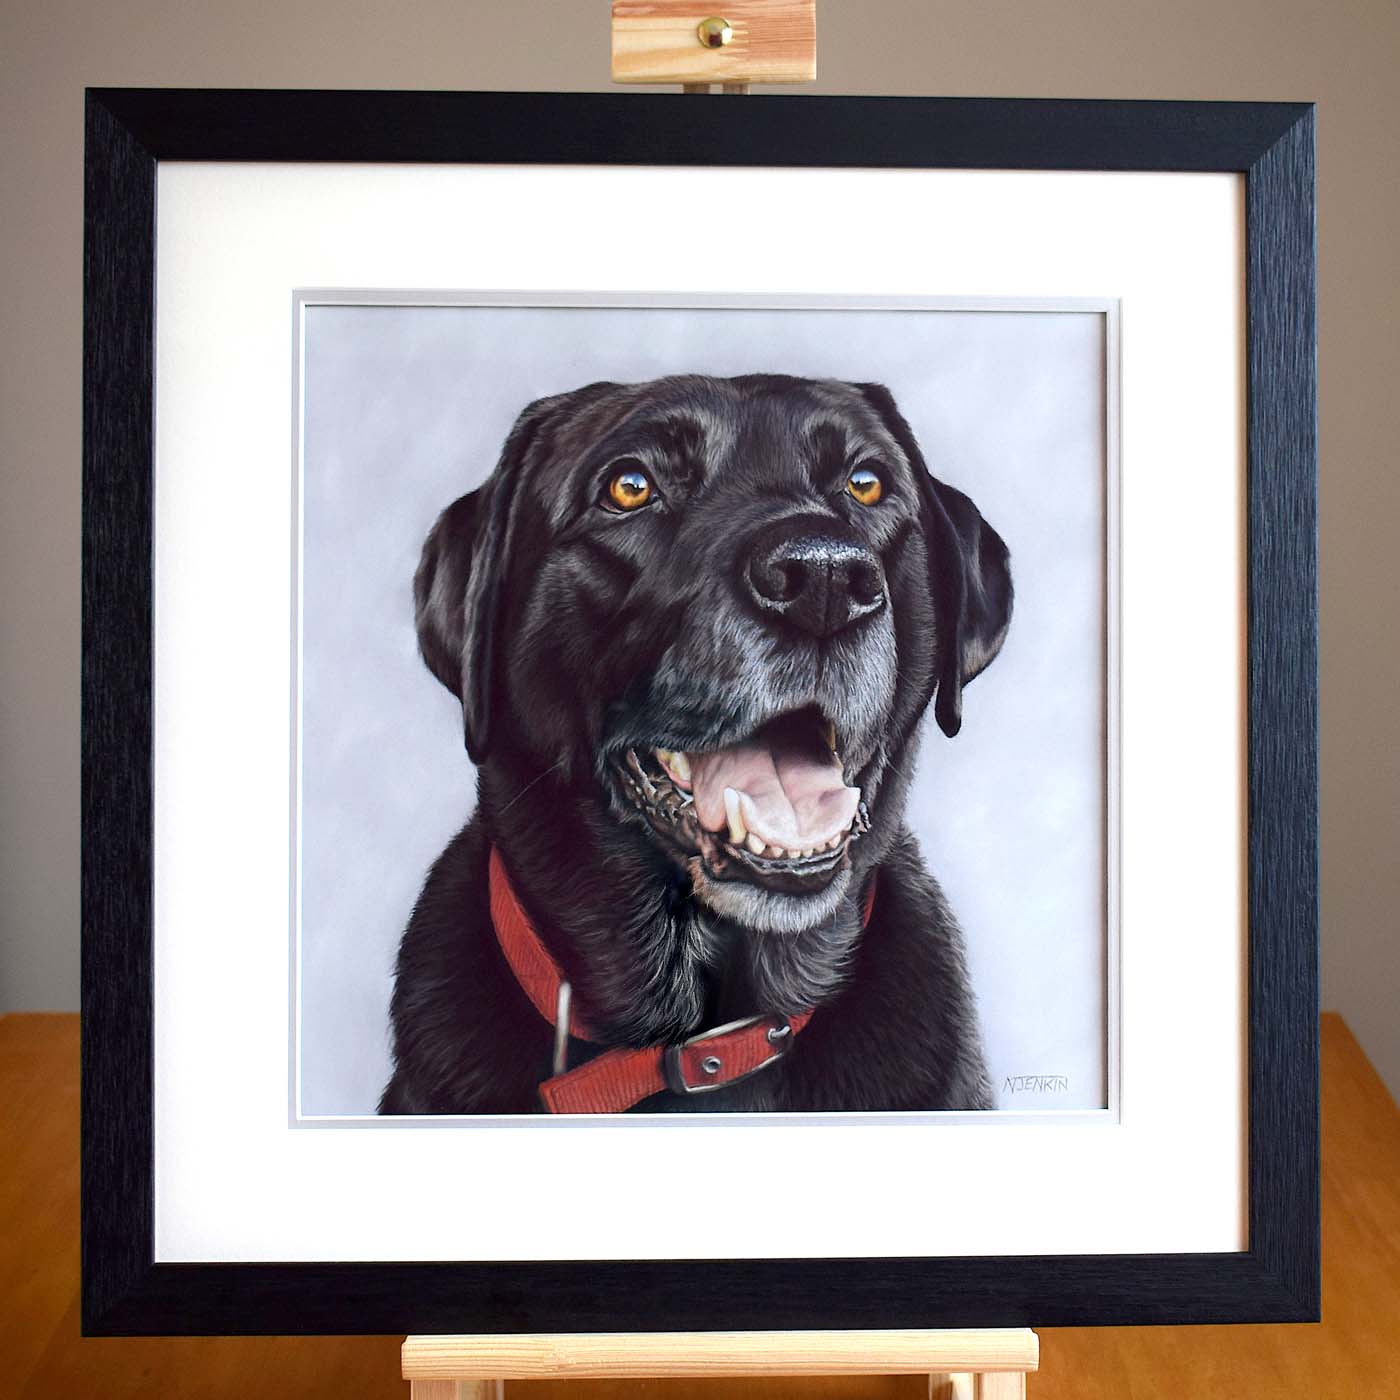 Framed pet portrait of Labrador by Naomi Jenkin Art. 